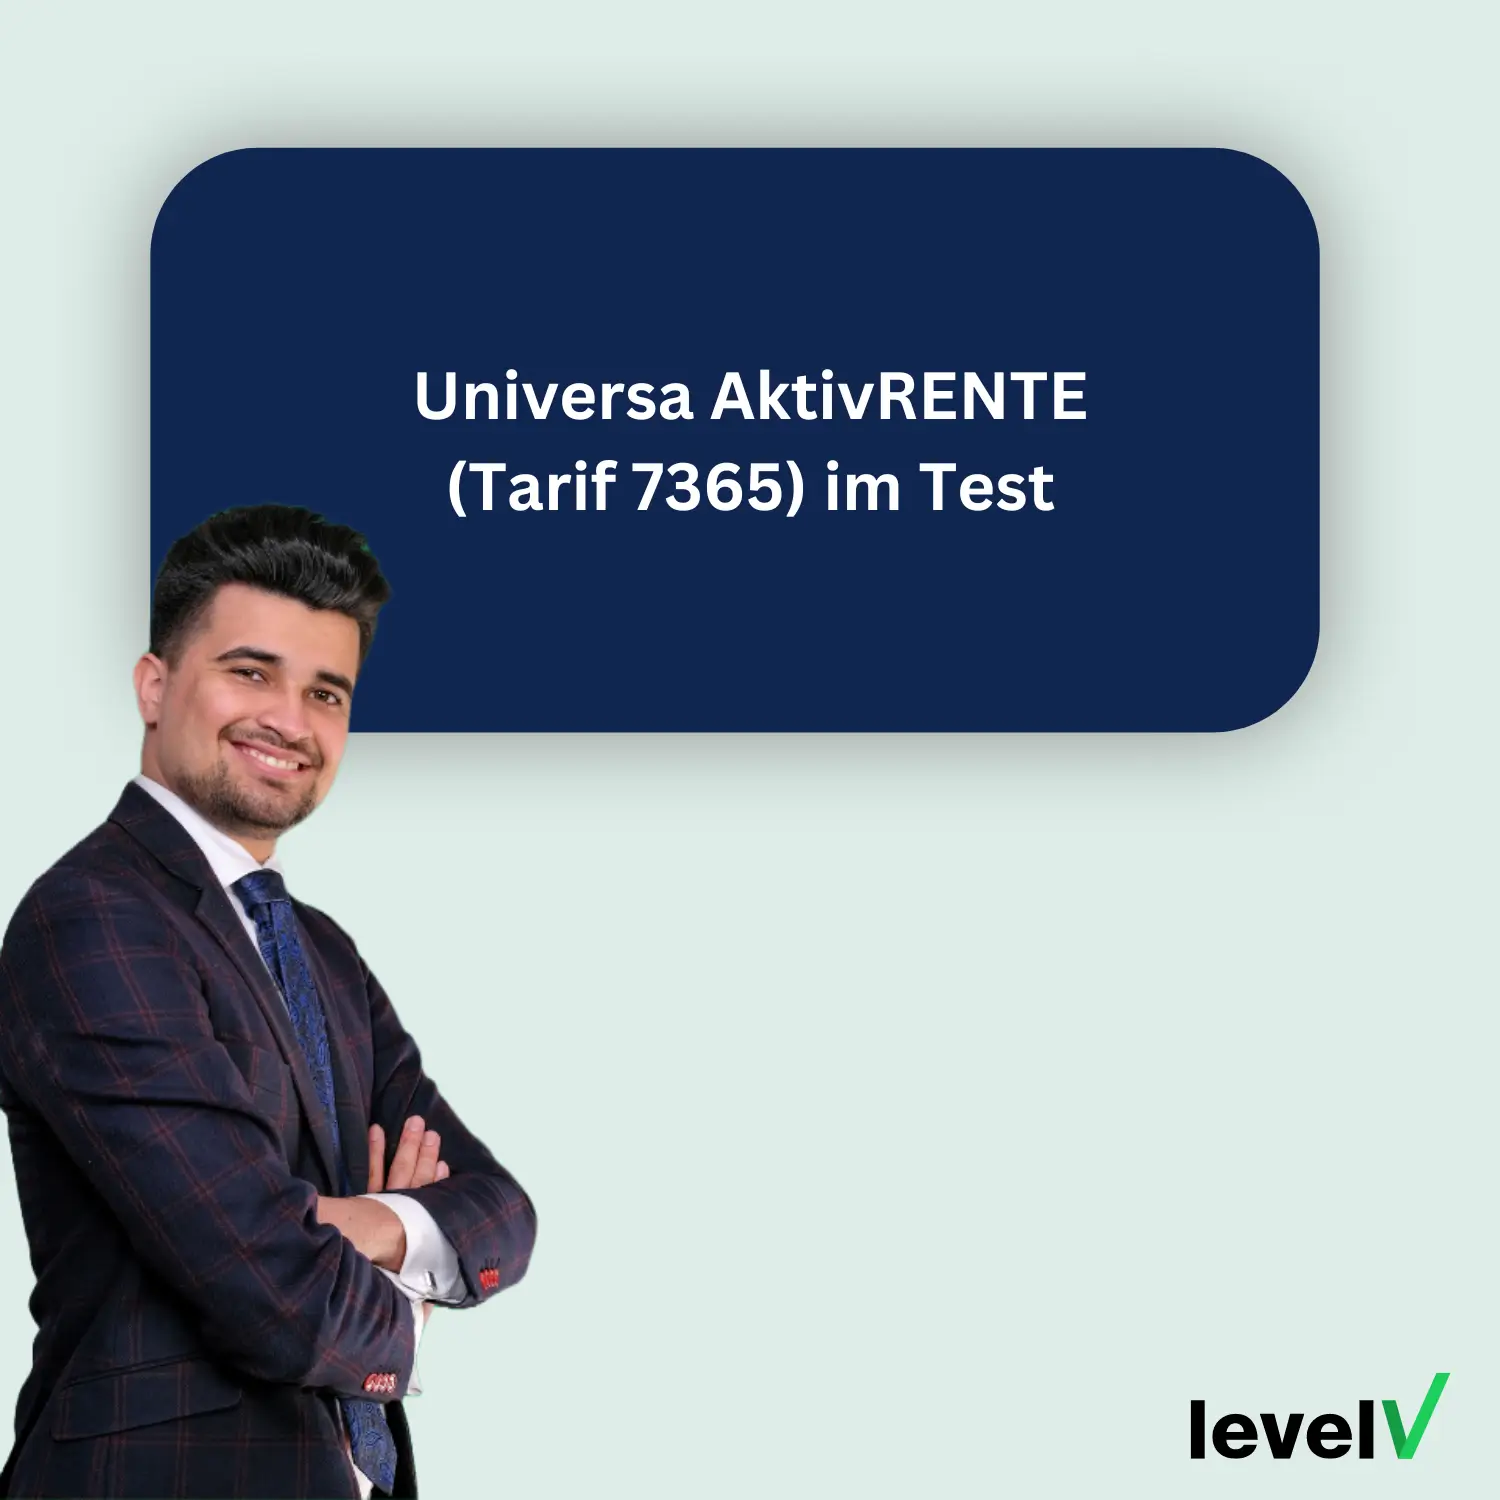 Universa AktivRENTE (Tarif 7365) im Test